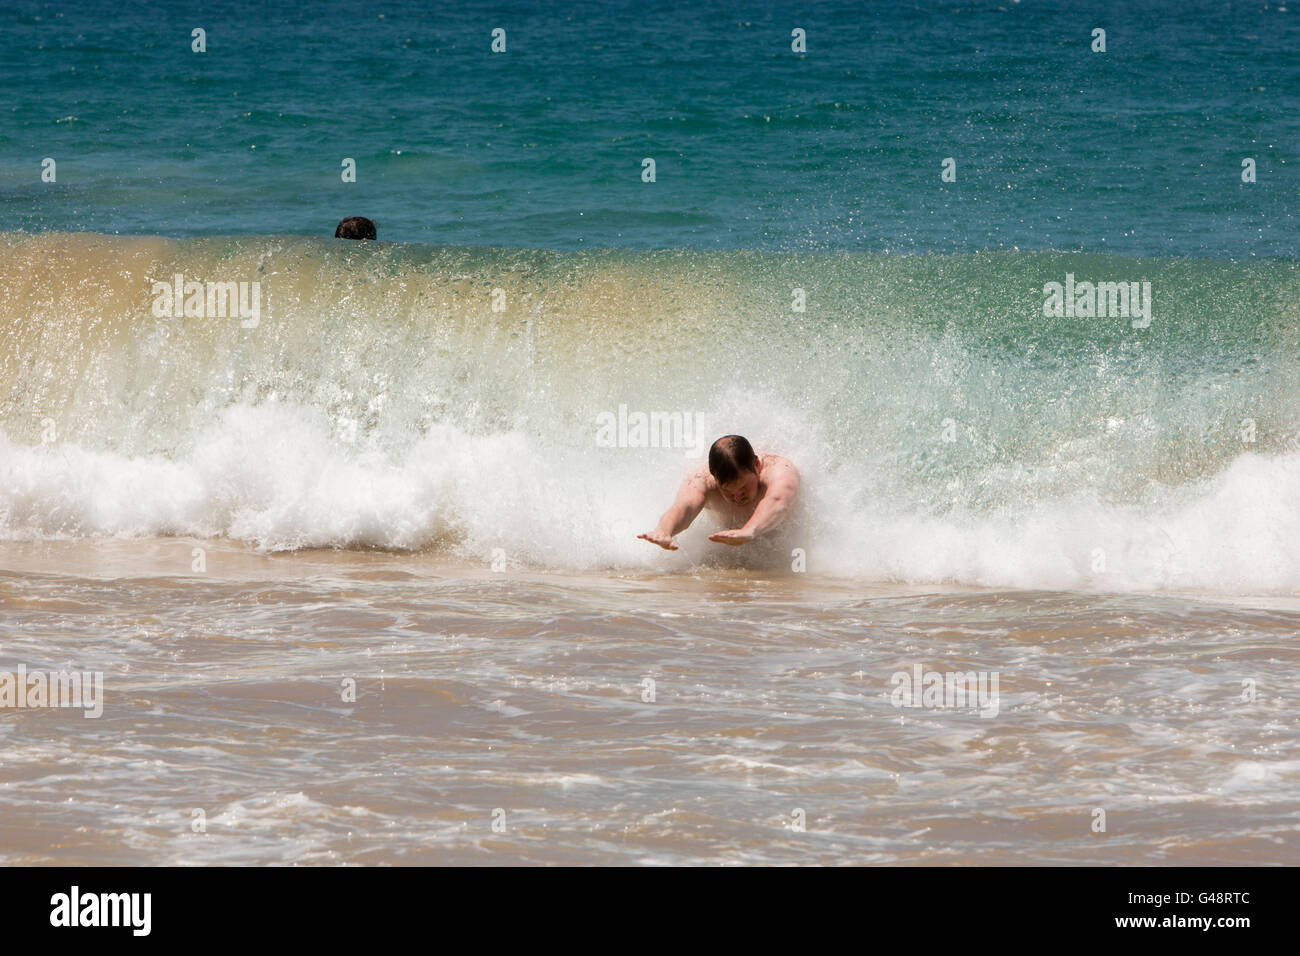 Sri Lanka, Mirissa beach, man body surfing in powerful wave Stock Photo